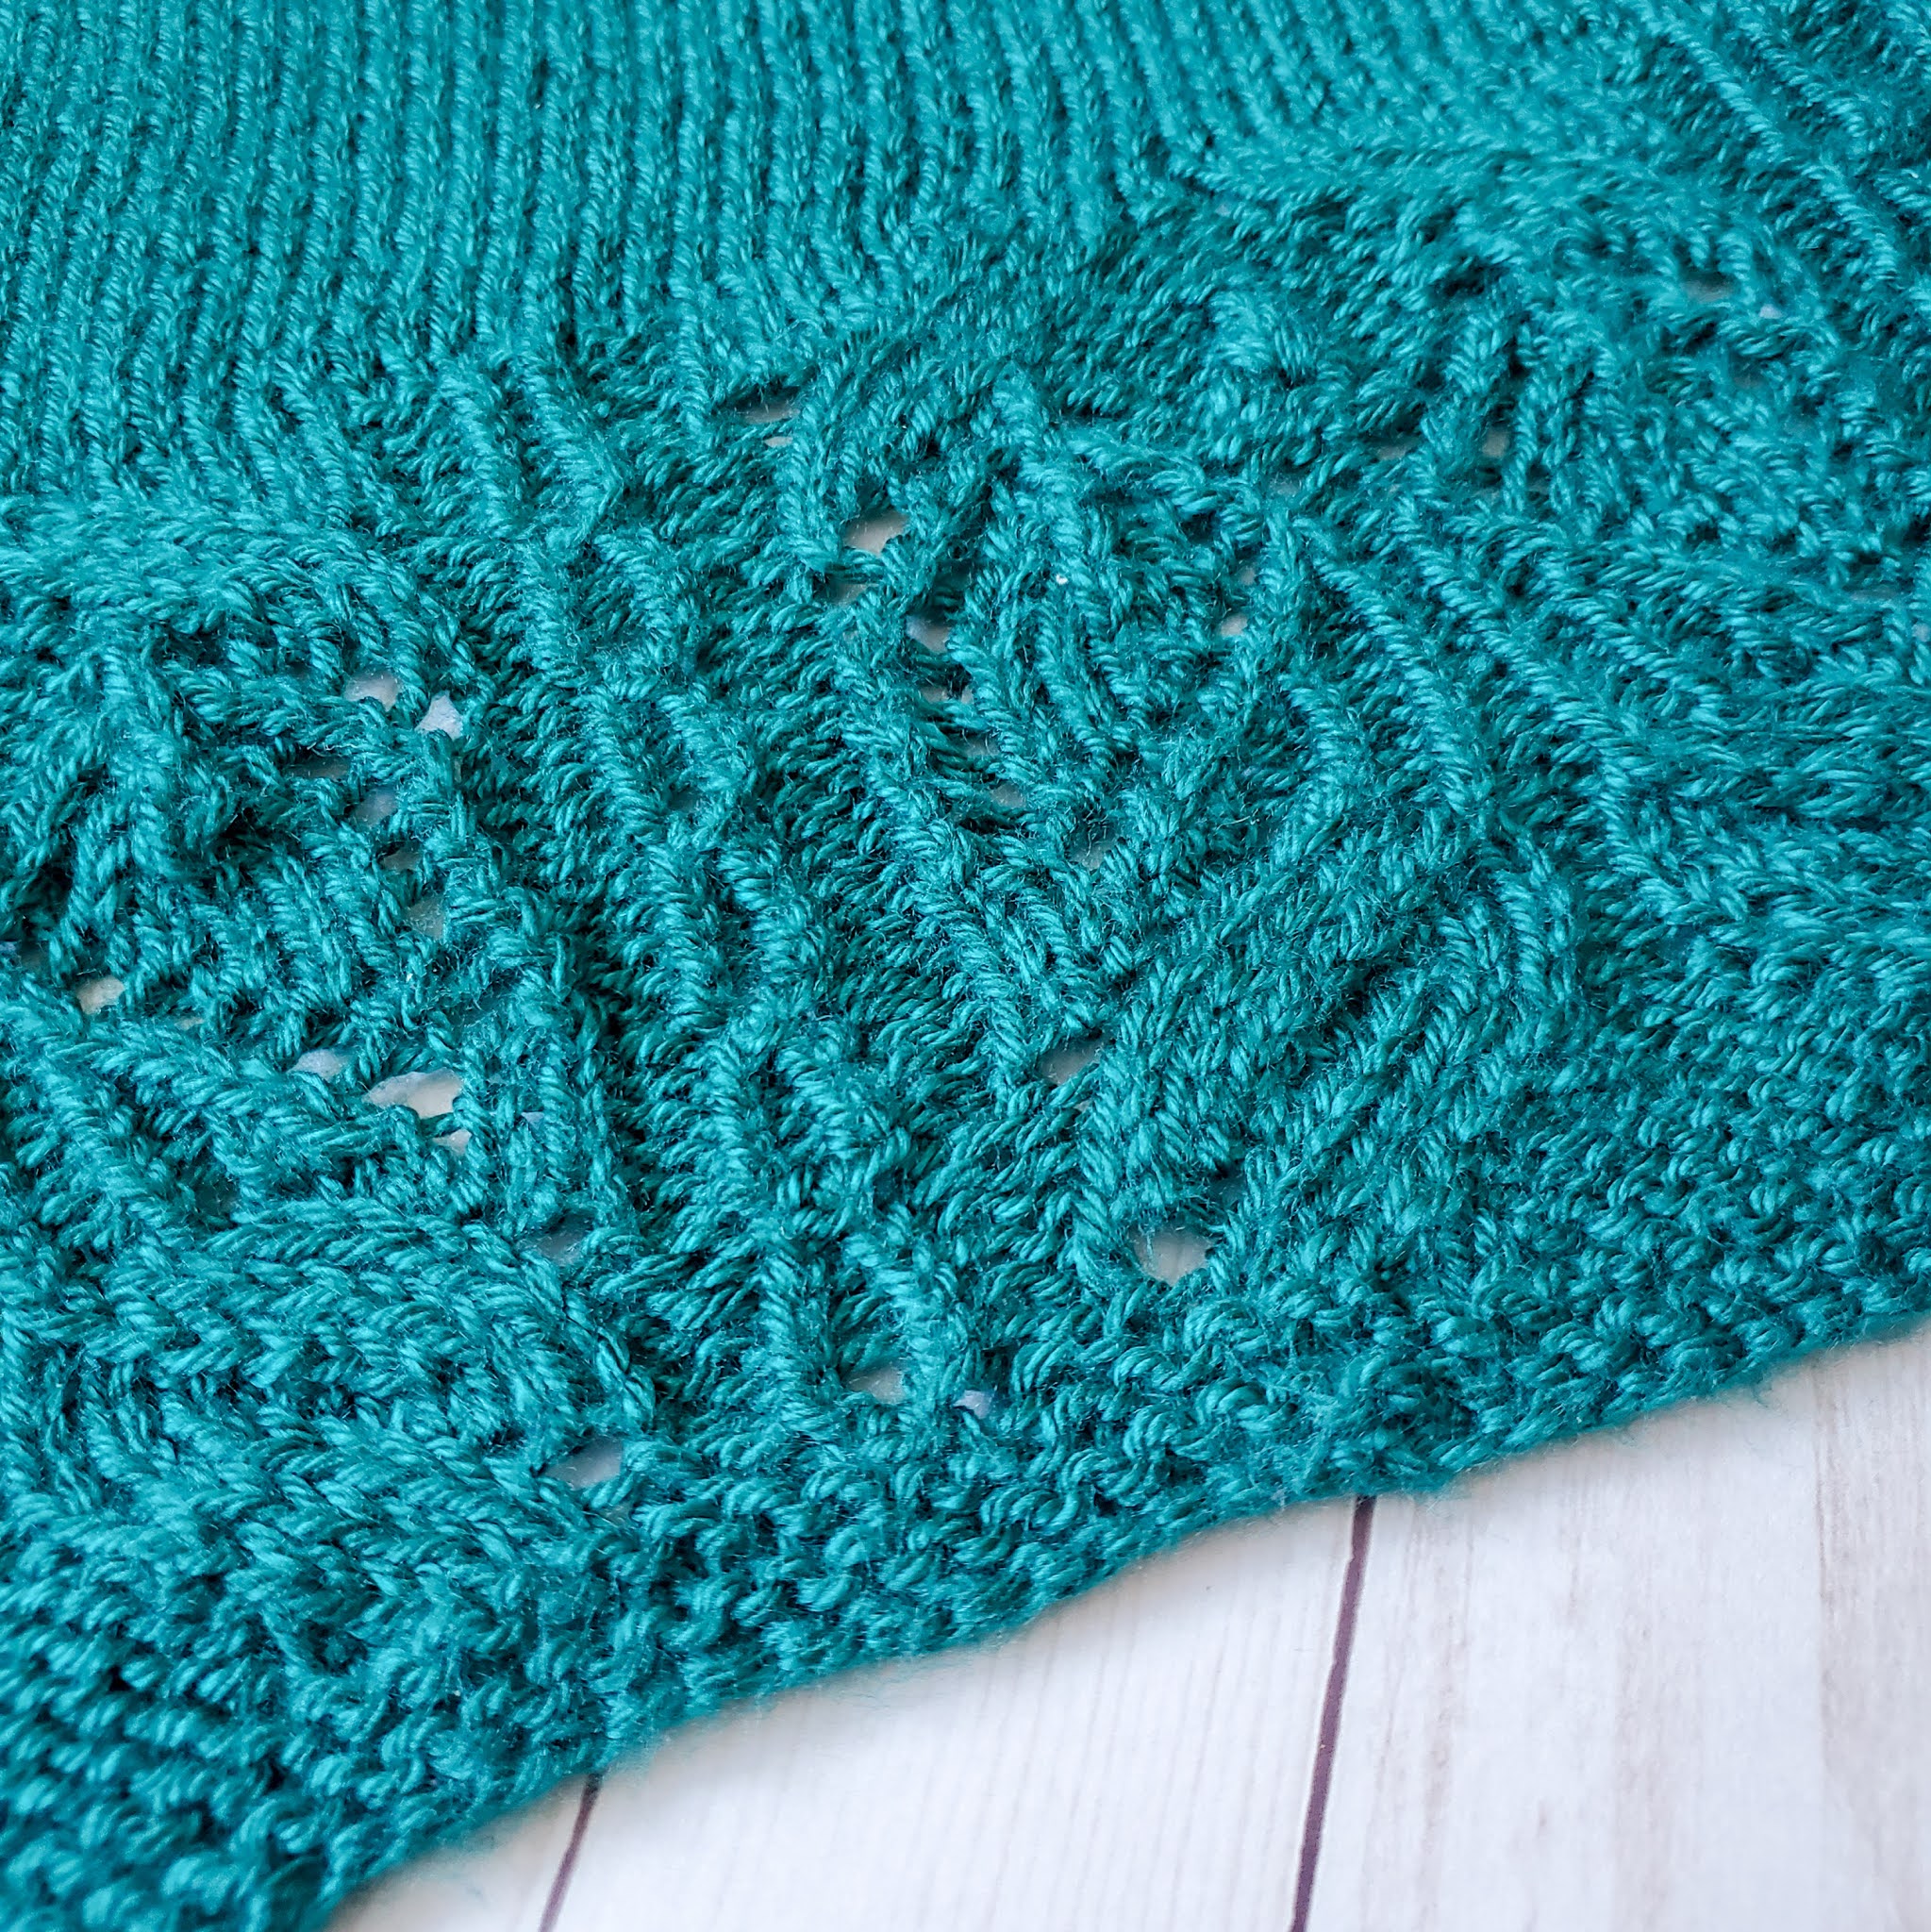 Modesty by Laura Emerald Shawl knit pattern.